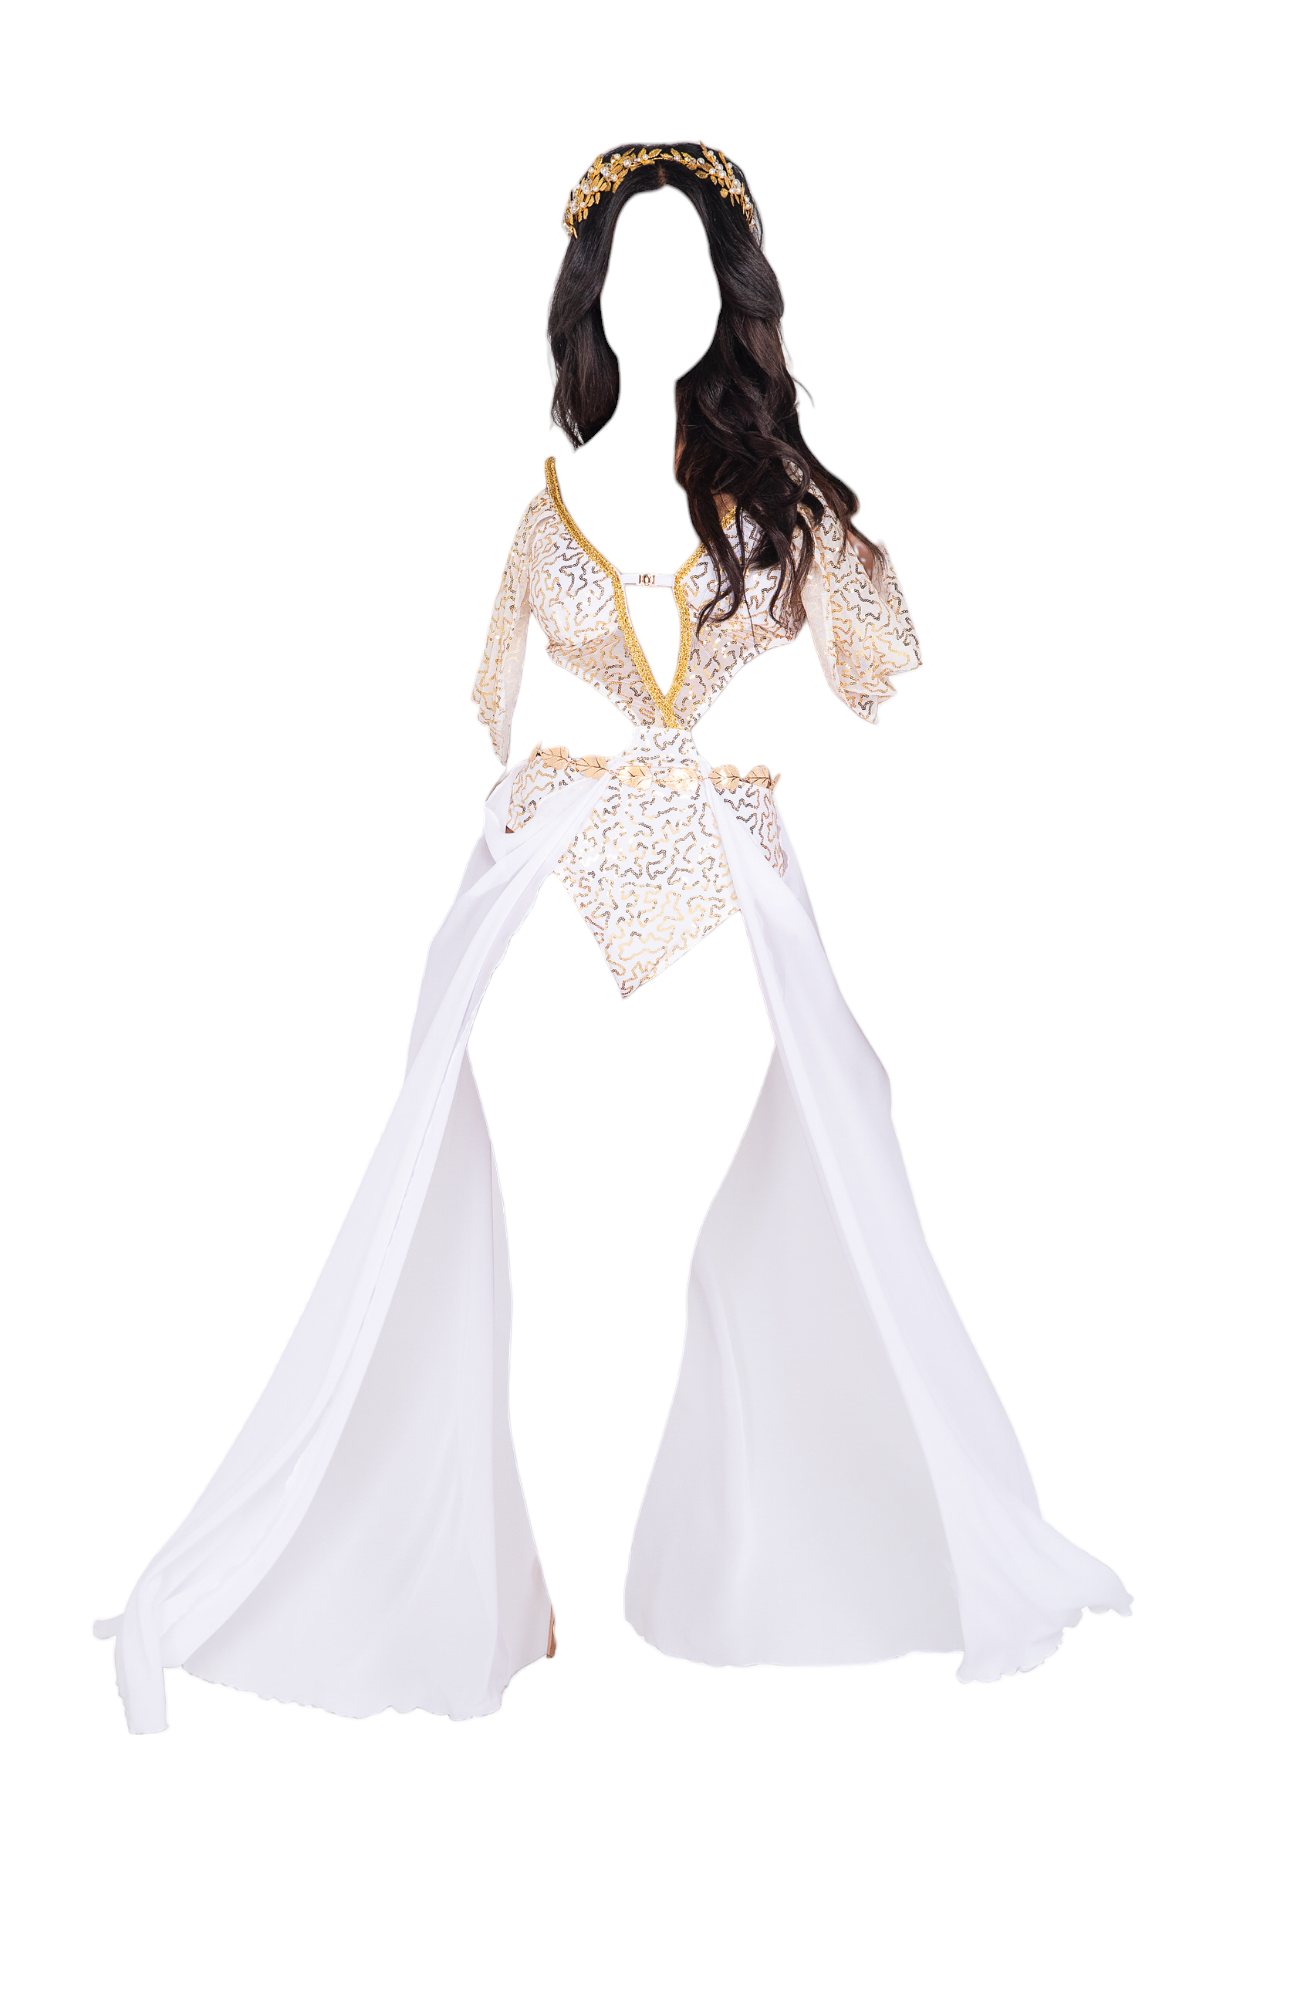 Roma Costume 2 PC Goddess Glam Bodysuit with Train White/Gold